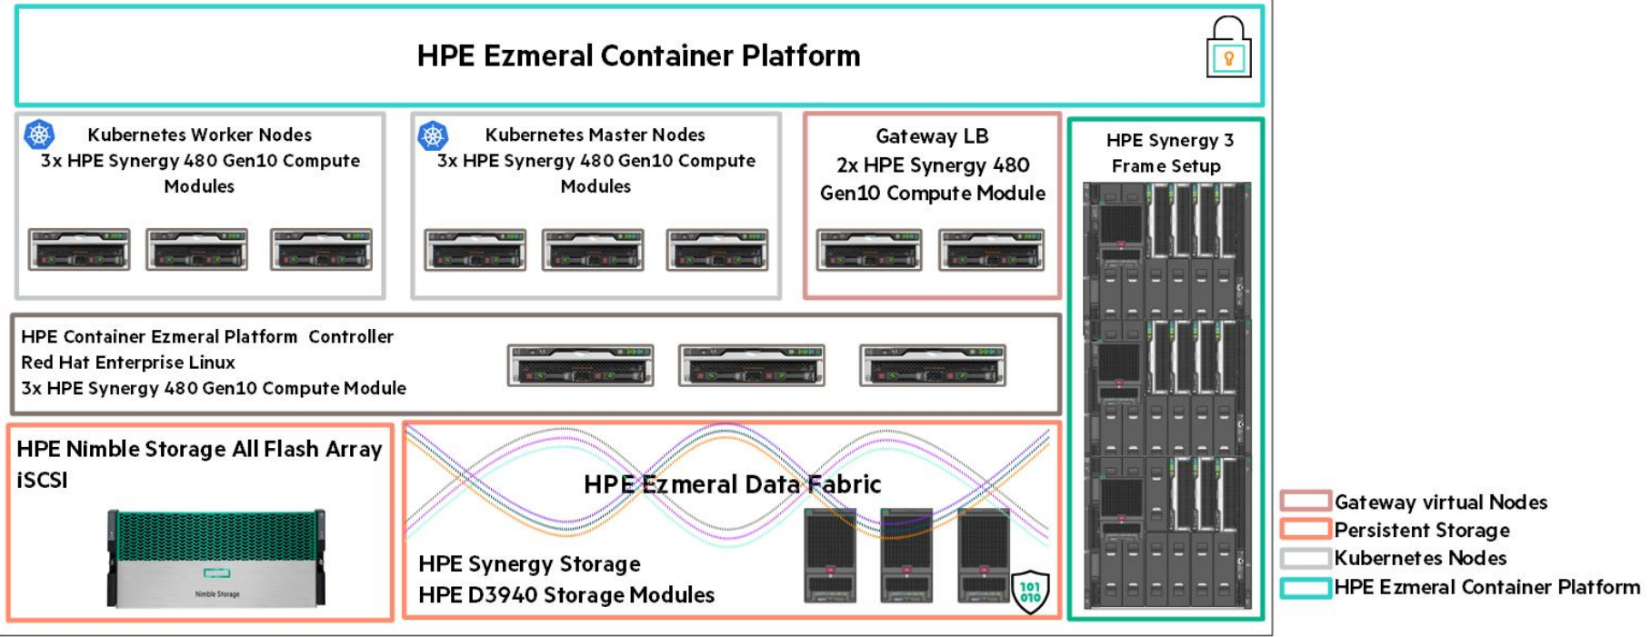 Figure 2. HPE Ezmeral Container Platform Solution Architecture